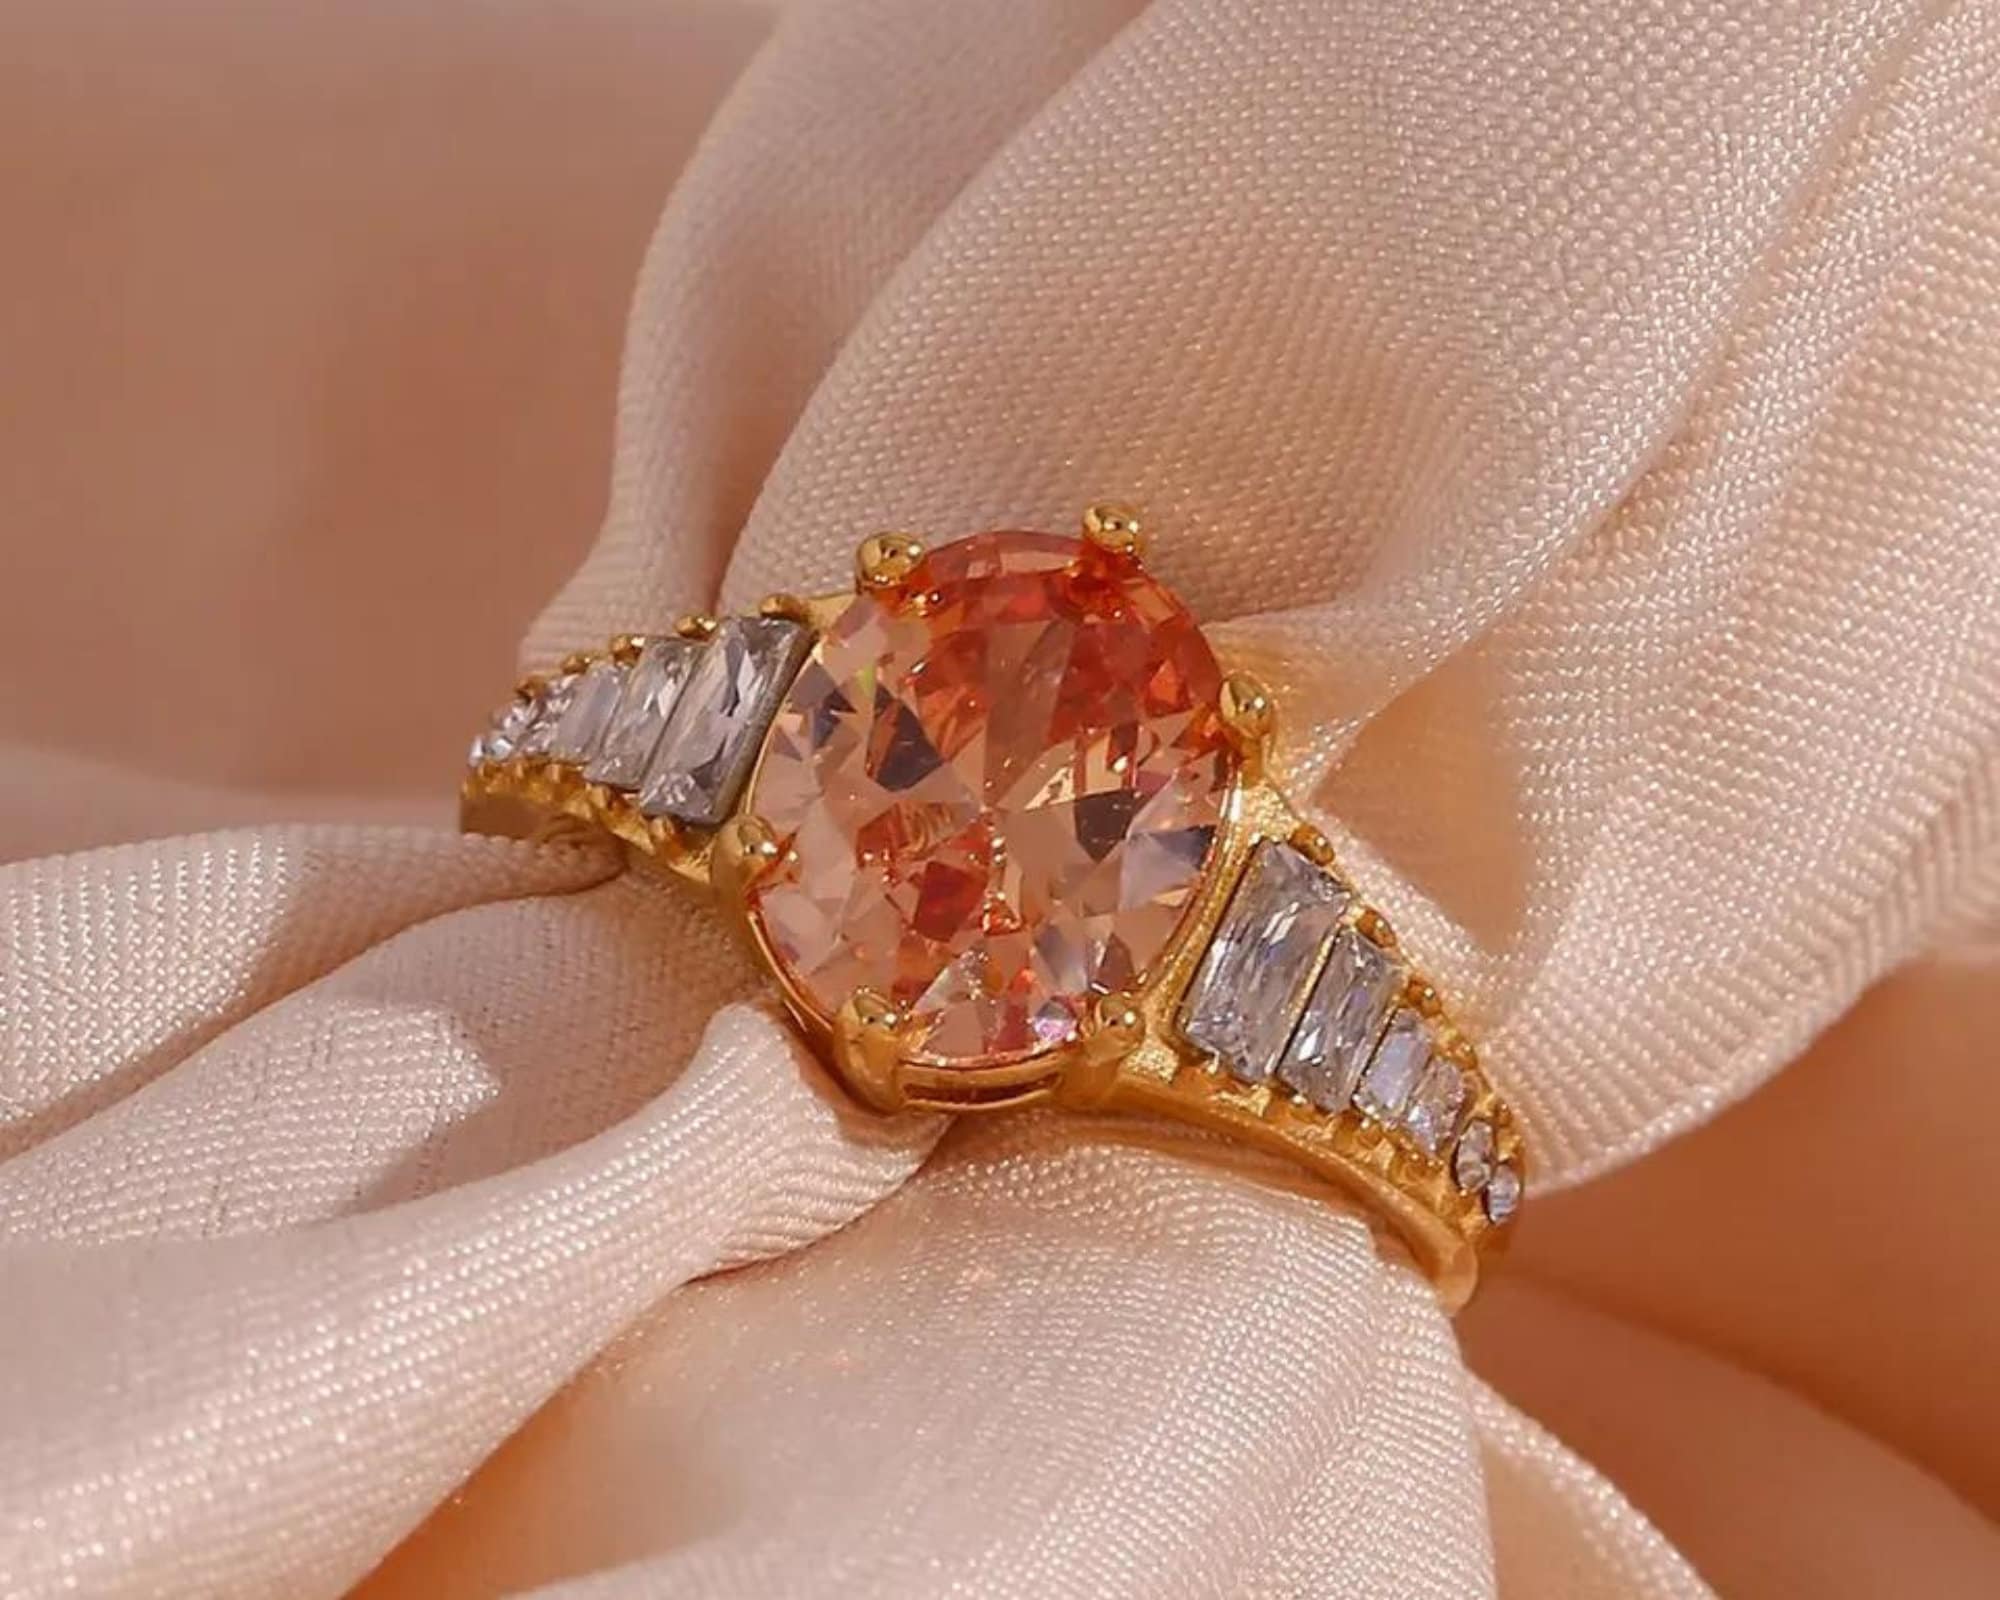 Adjustable Luxury Copper Wedding Rings for Women CZ Zircon 18k